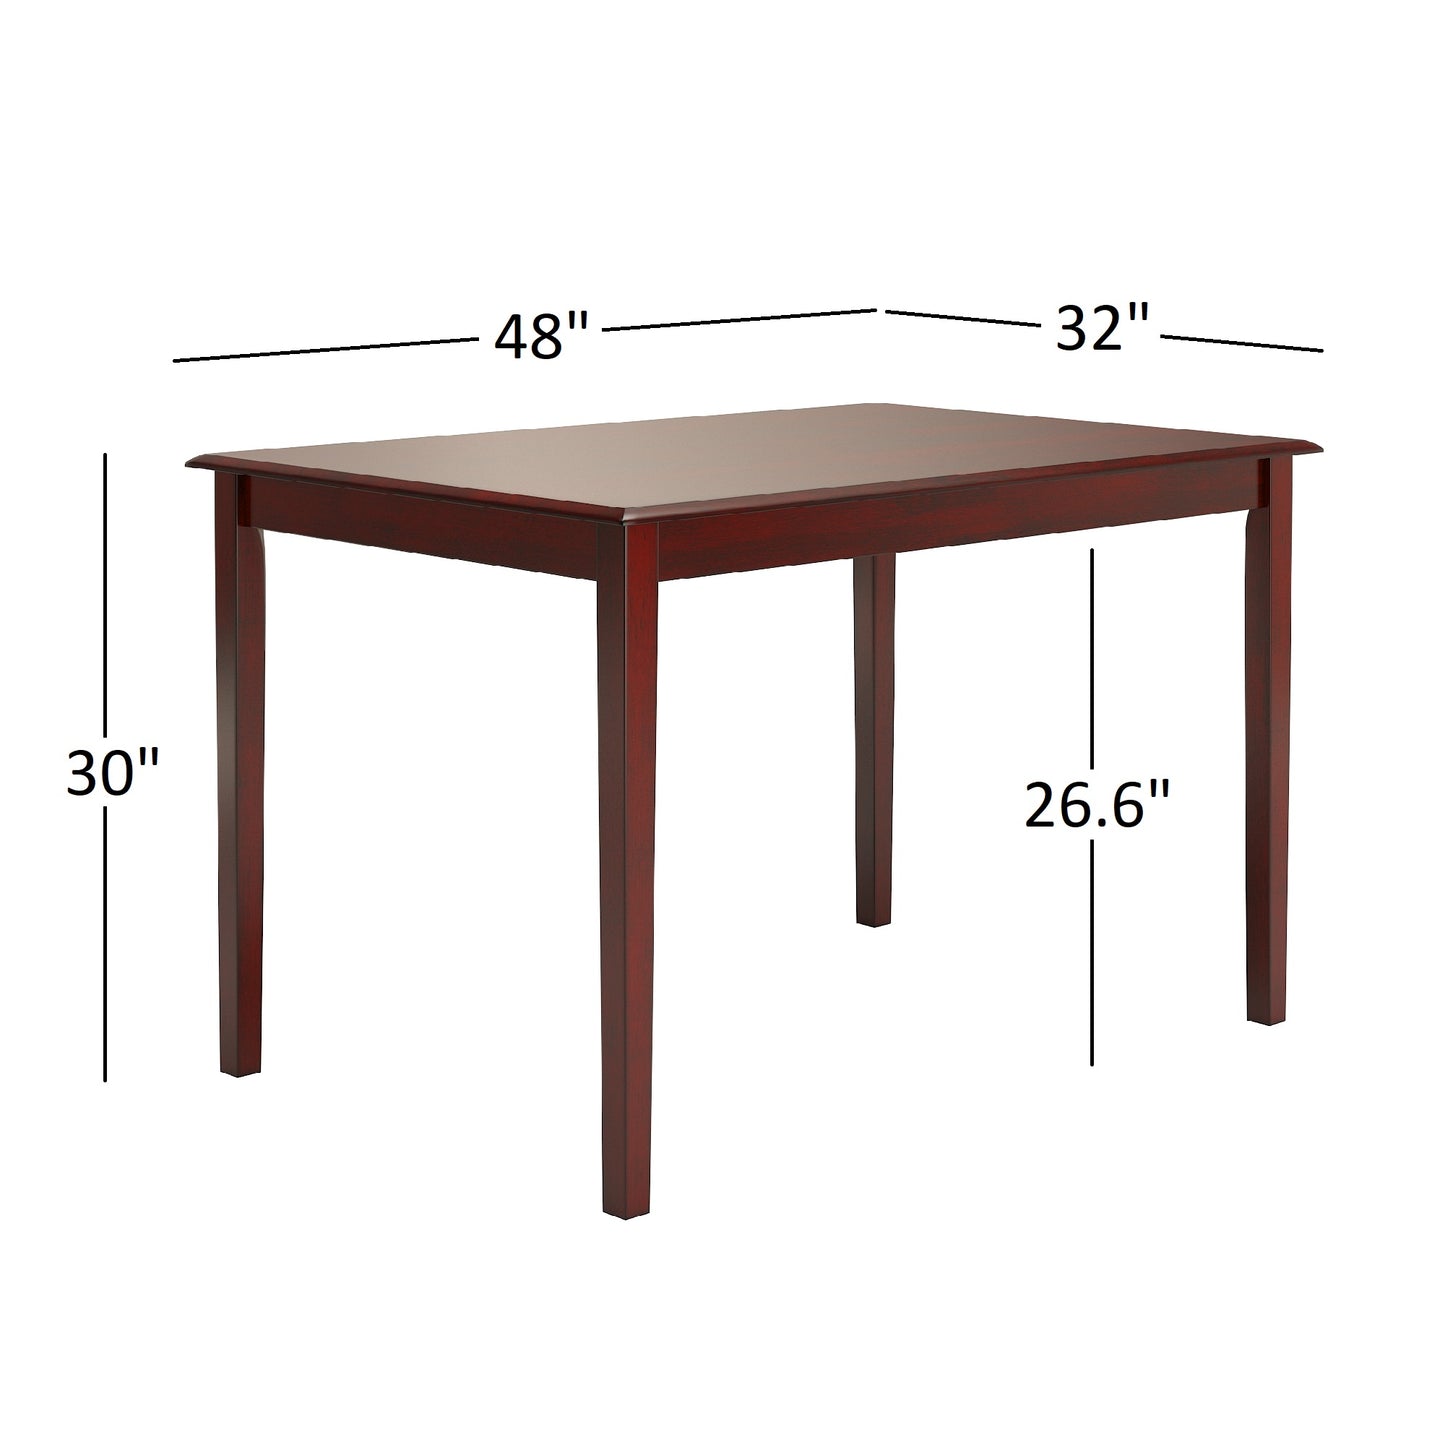 Oak Wood Finish 48-inch Rectangle Dining Set - Antique Berry Red Finish, Slat Back Chairs